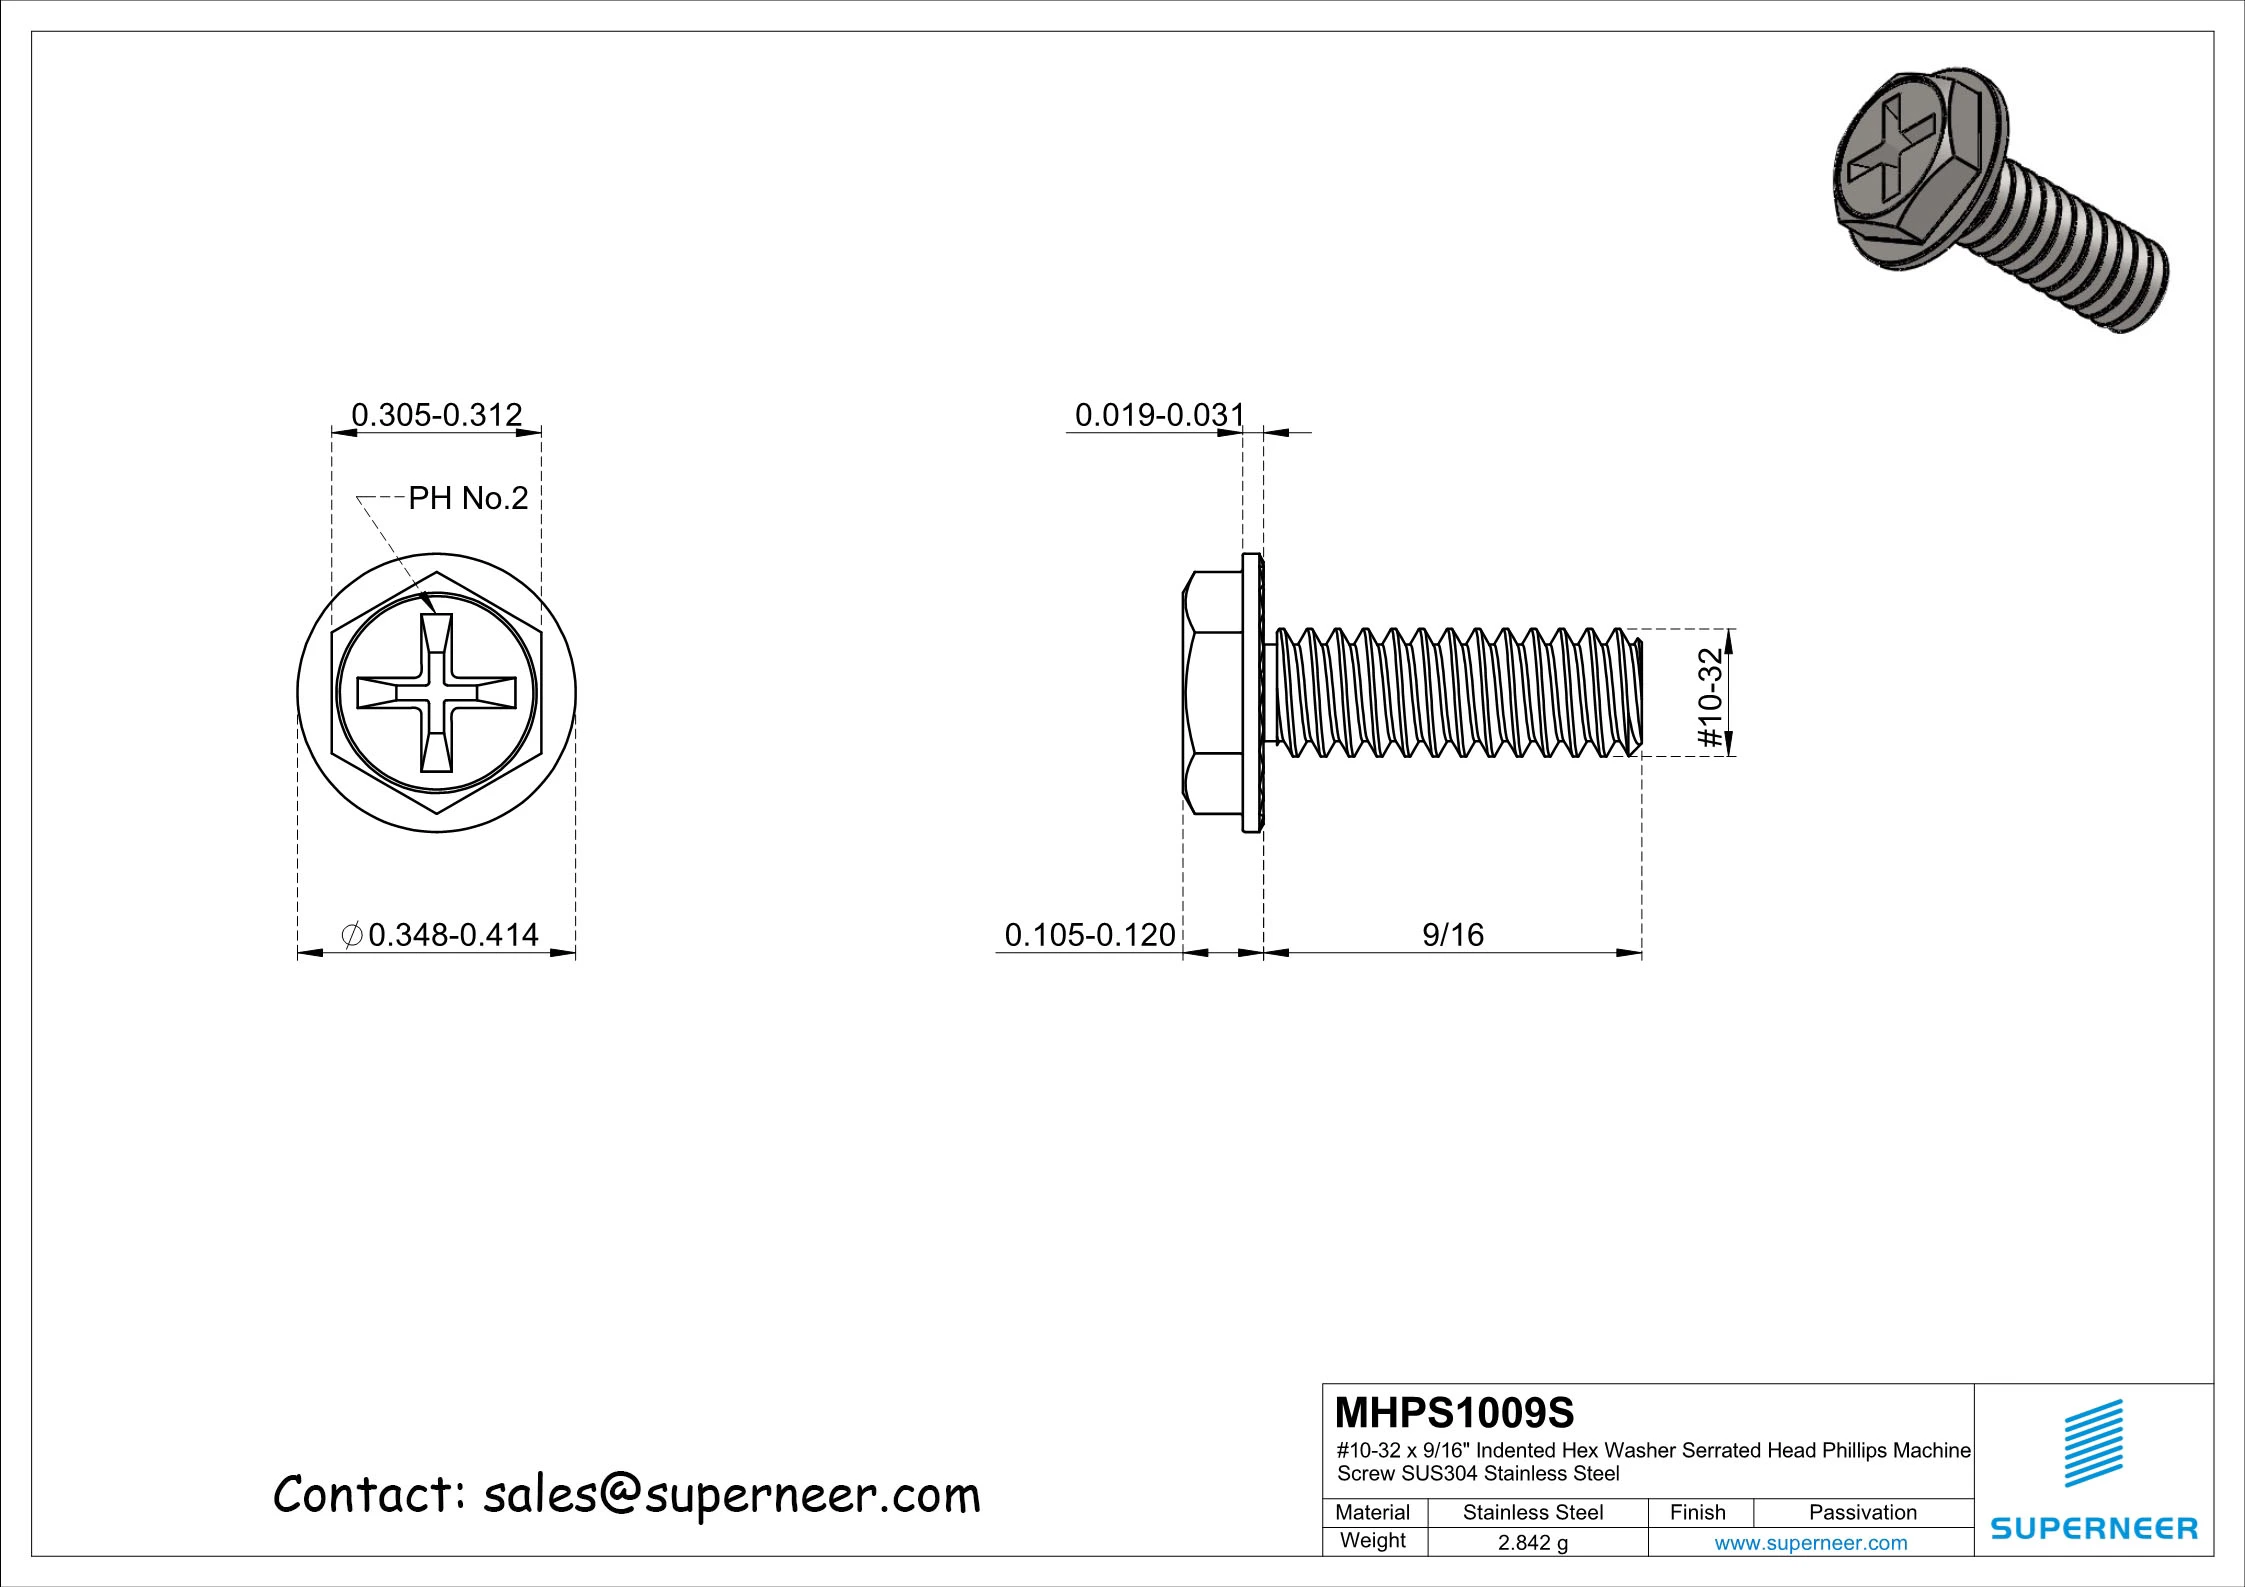 10-32 x 9/16“ Indented Hex Washer Serrated Head Phillips Machine Screw SUS304 Stainless Steel Inox